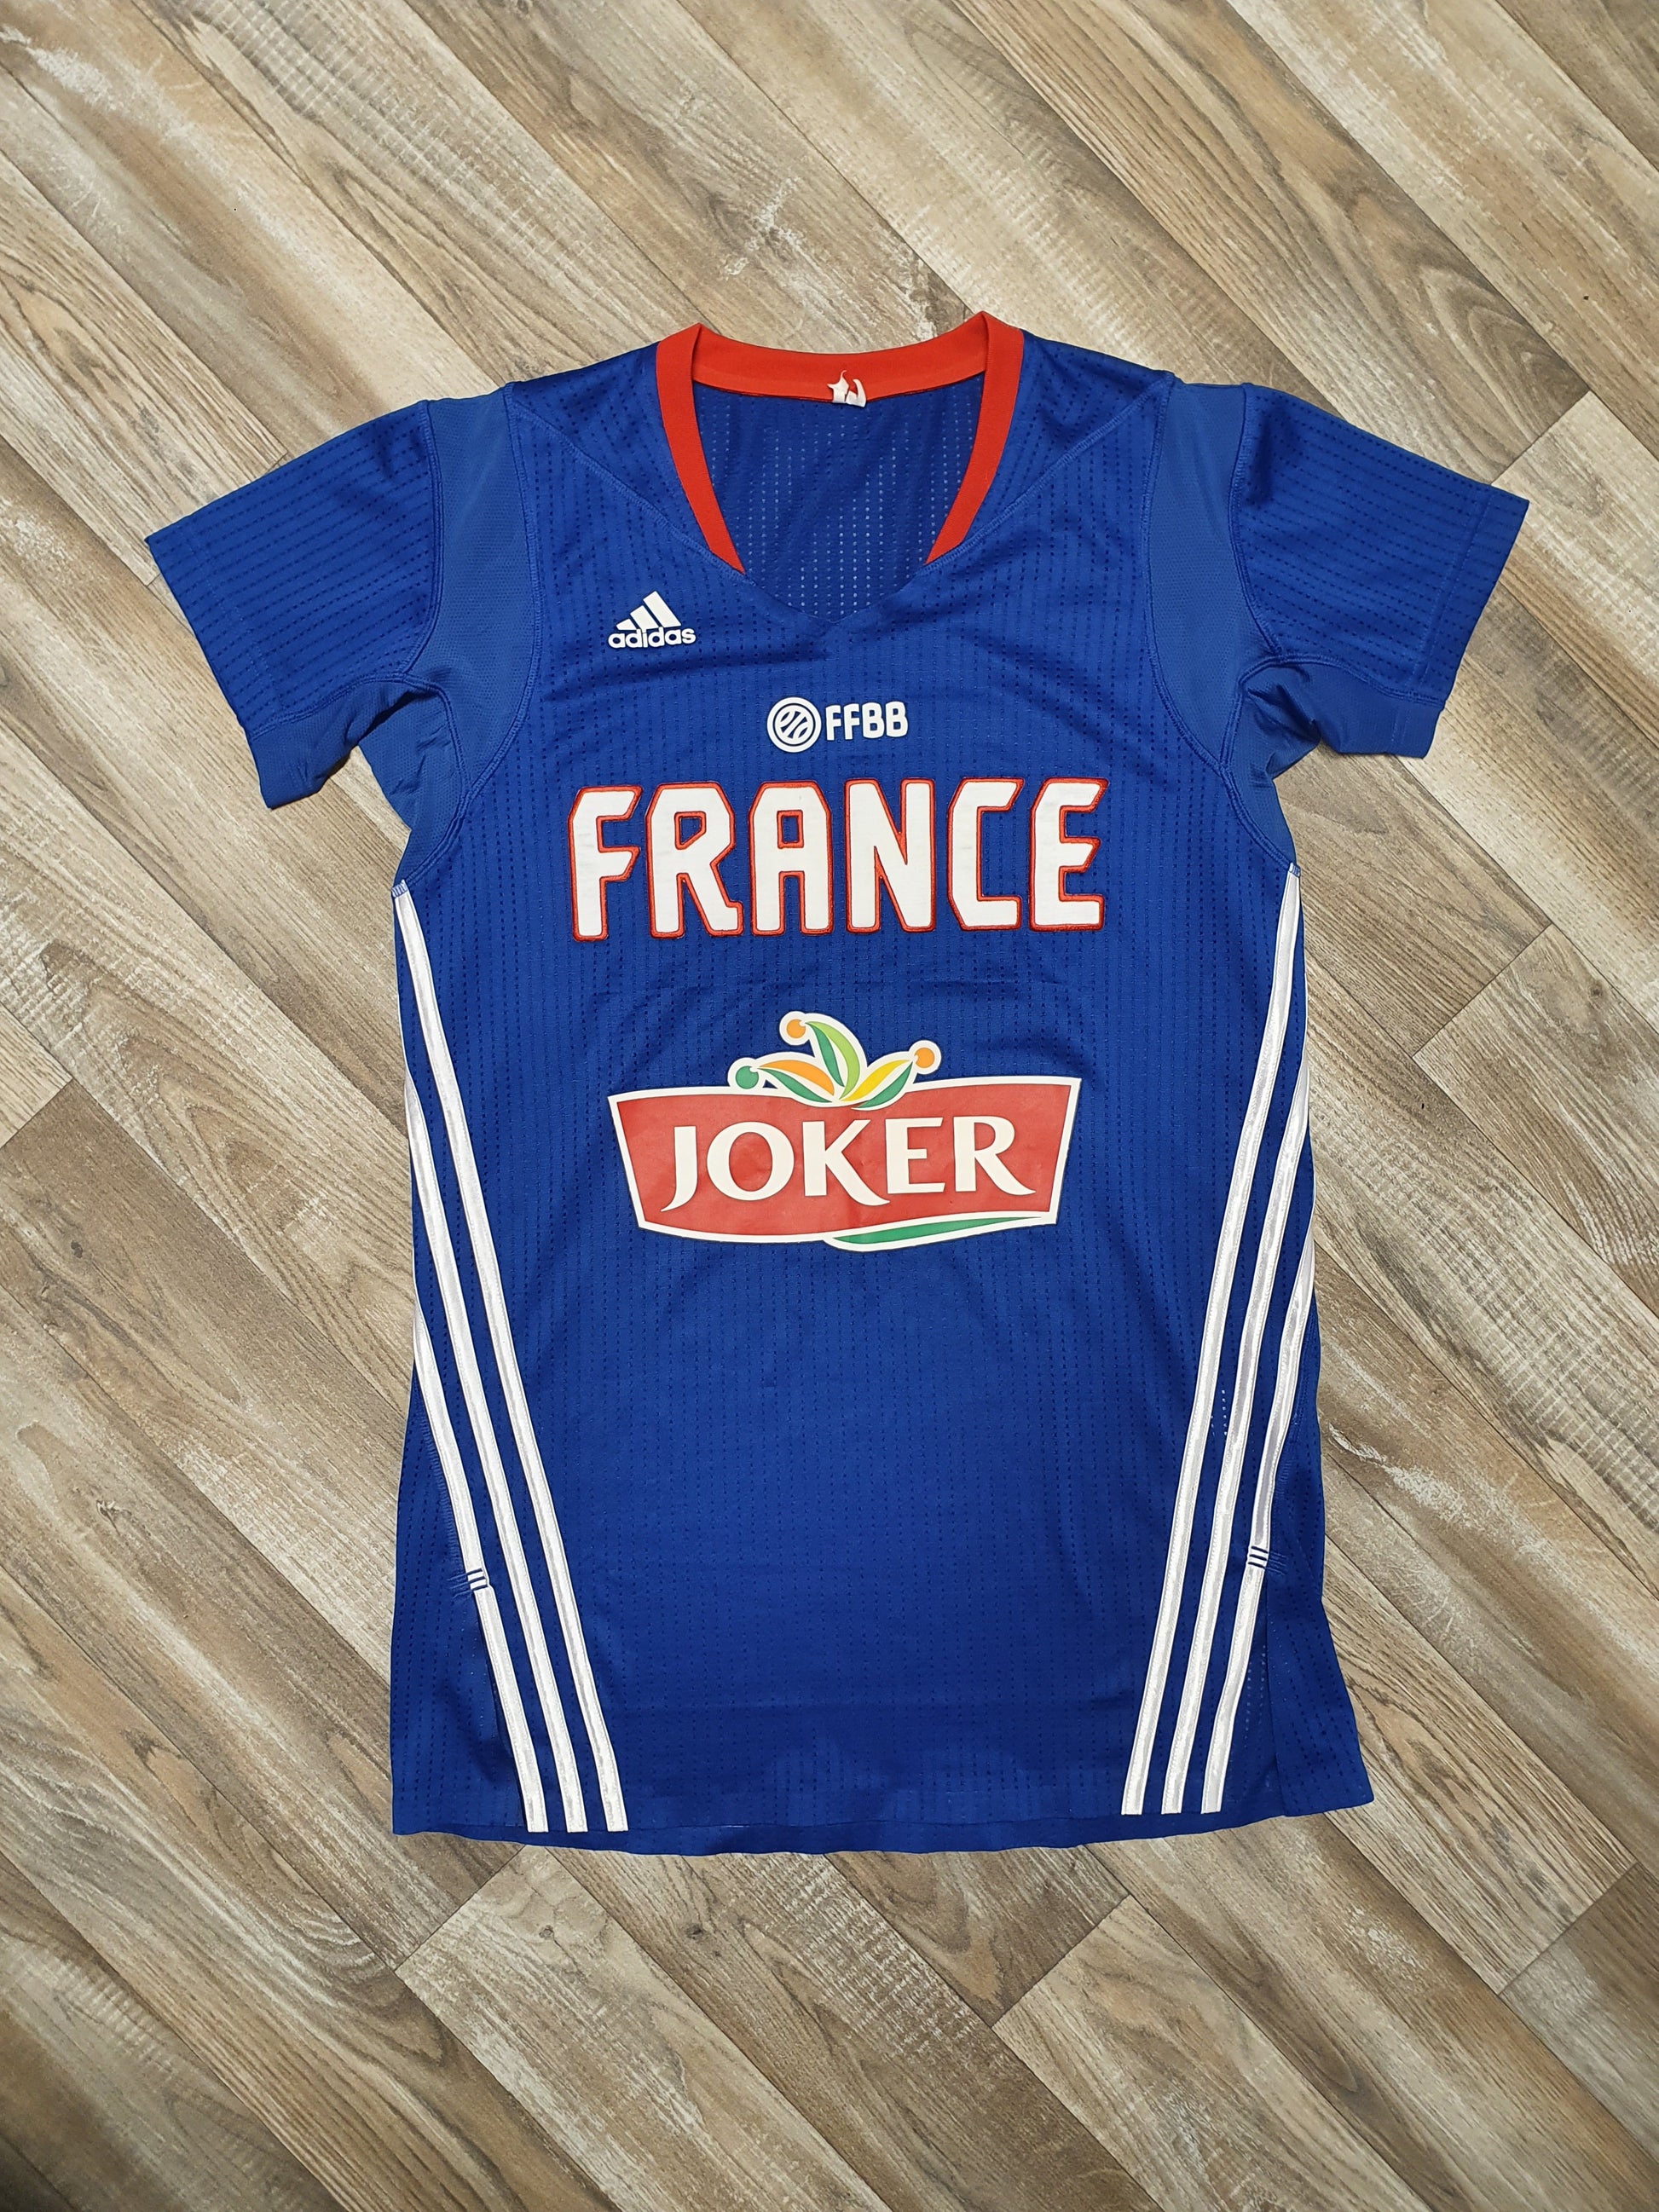 France Basketball Blank Woman’s Jersey Size Medium